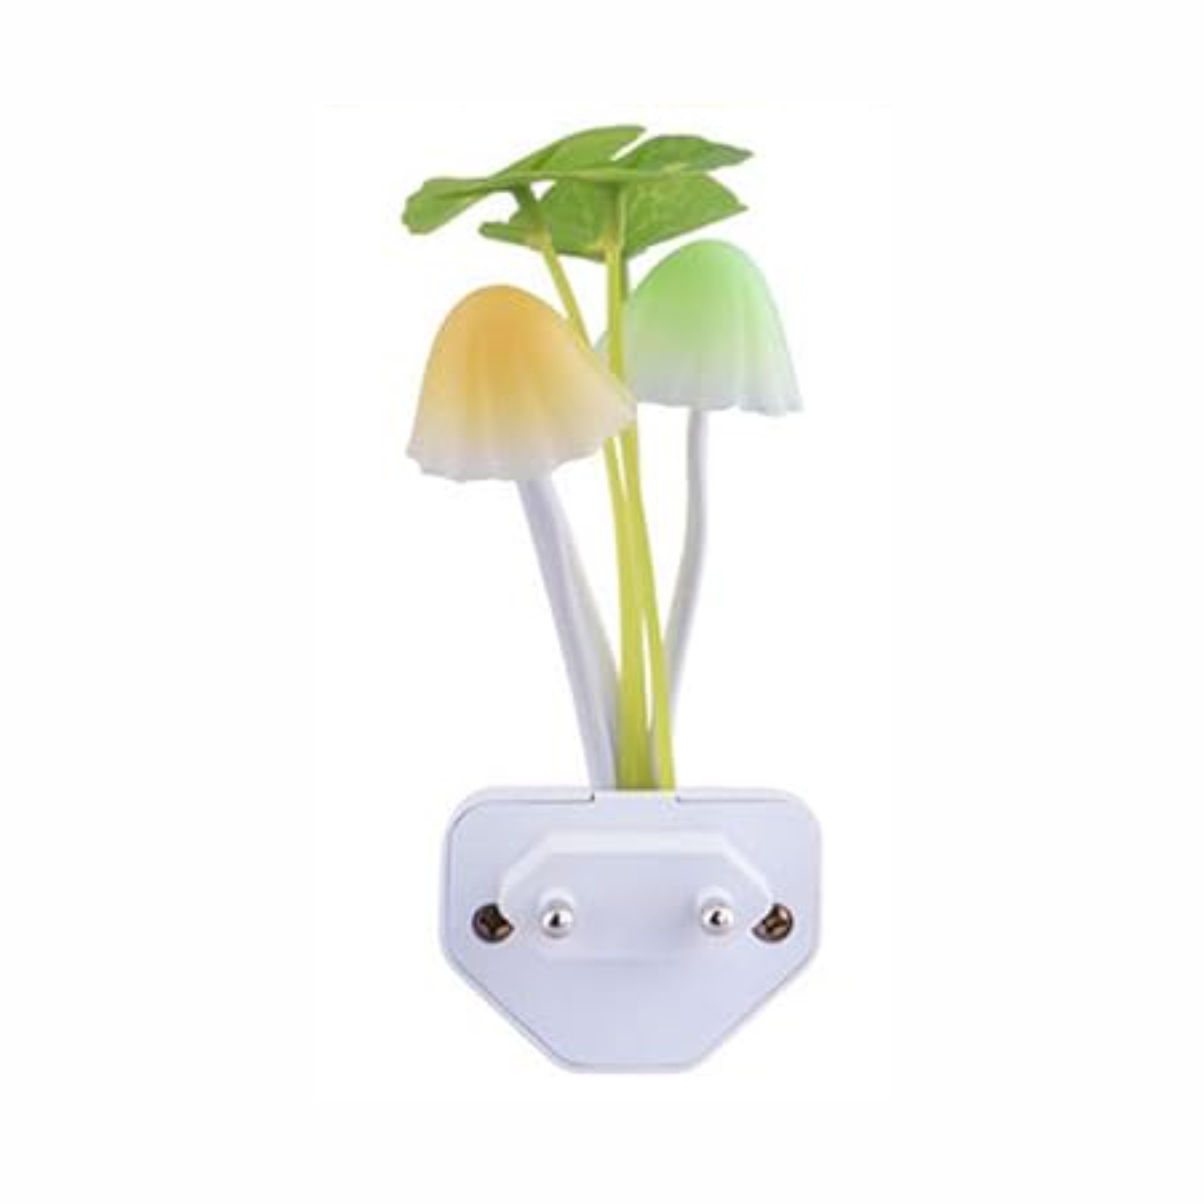 Worvo Automatic Smart Sensor Garden Mushroom LED Night Lamp, Color-Changing Decorative Wall Socket Light for Romantic Home Decor